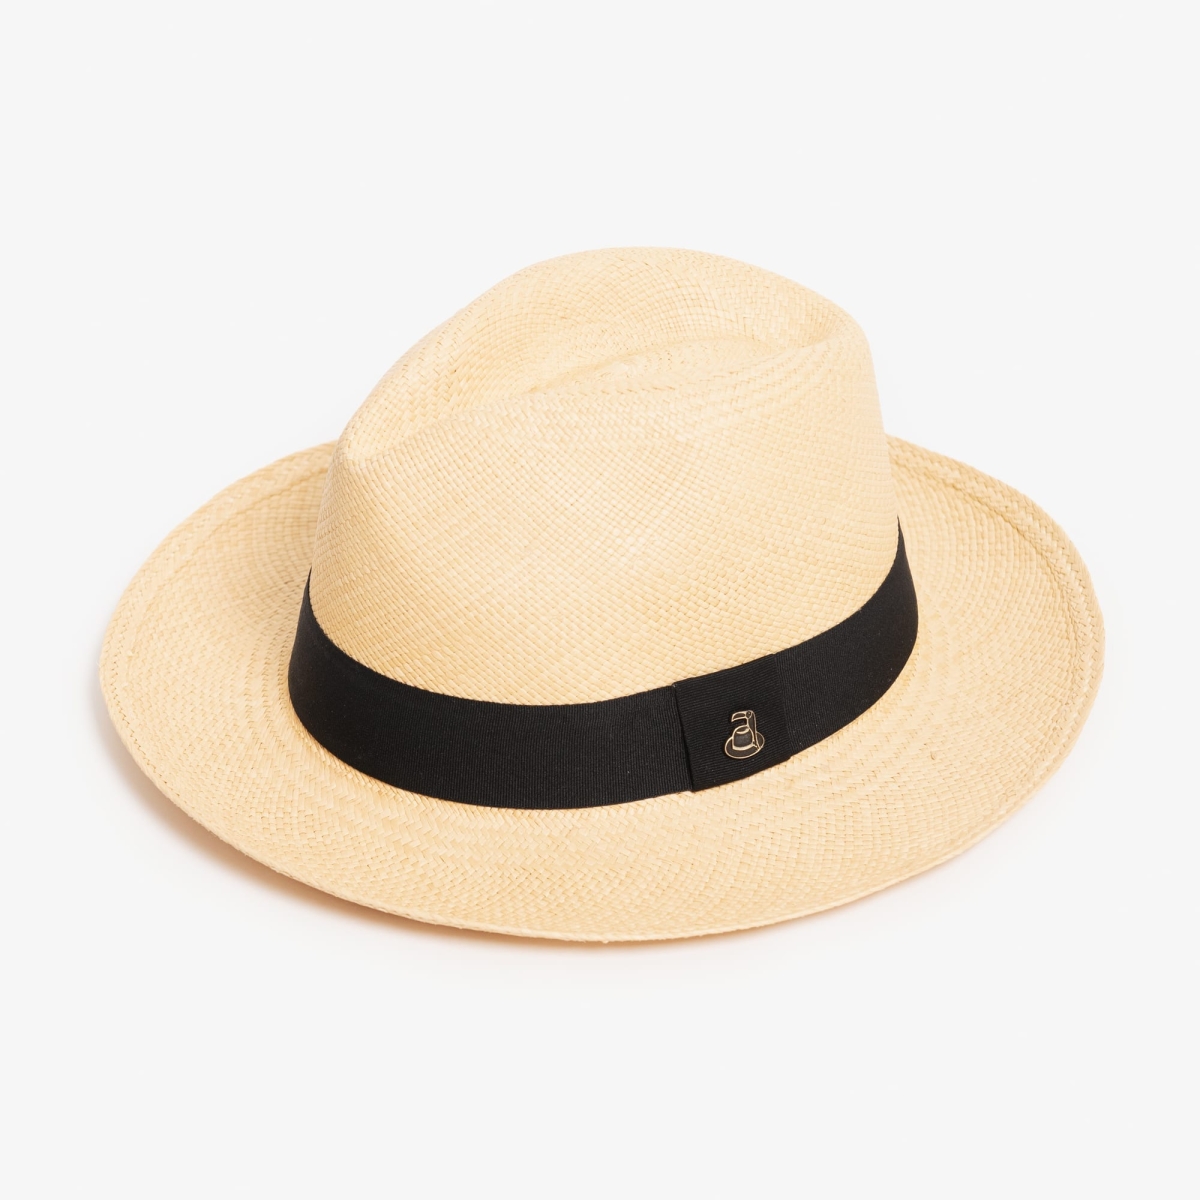 Panama Hats from Ecuador – Choose a Size & Colour at Henley Circle Online Shop